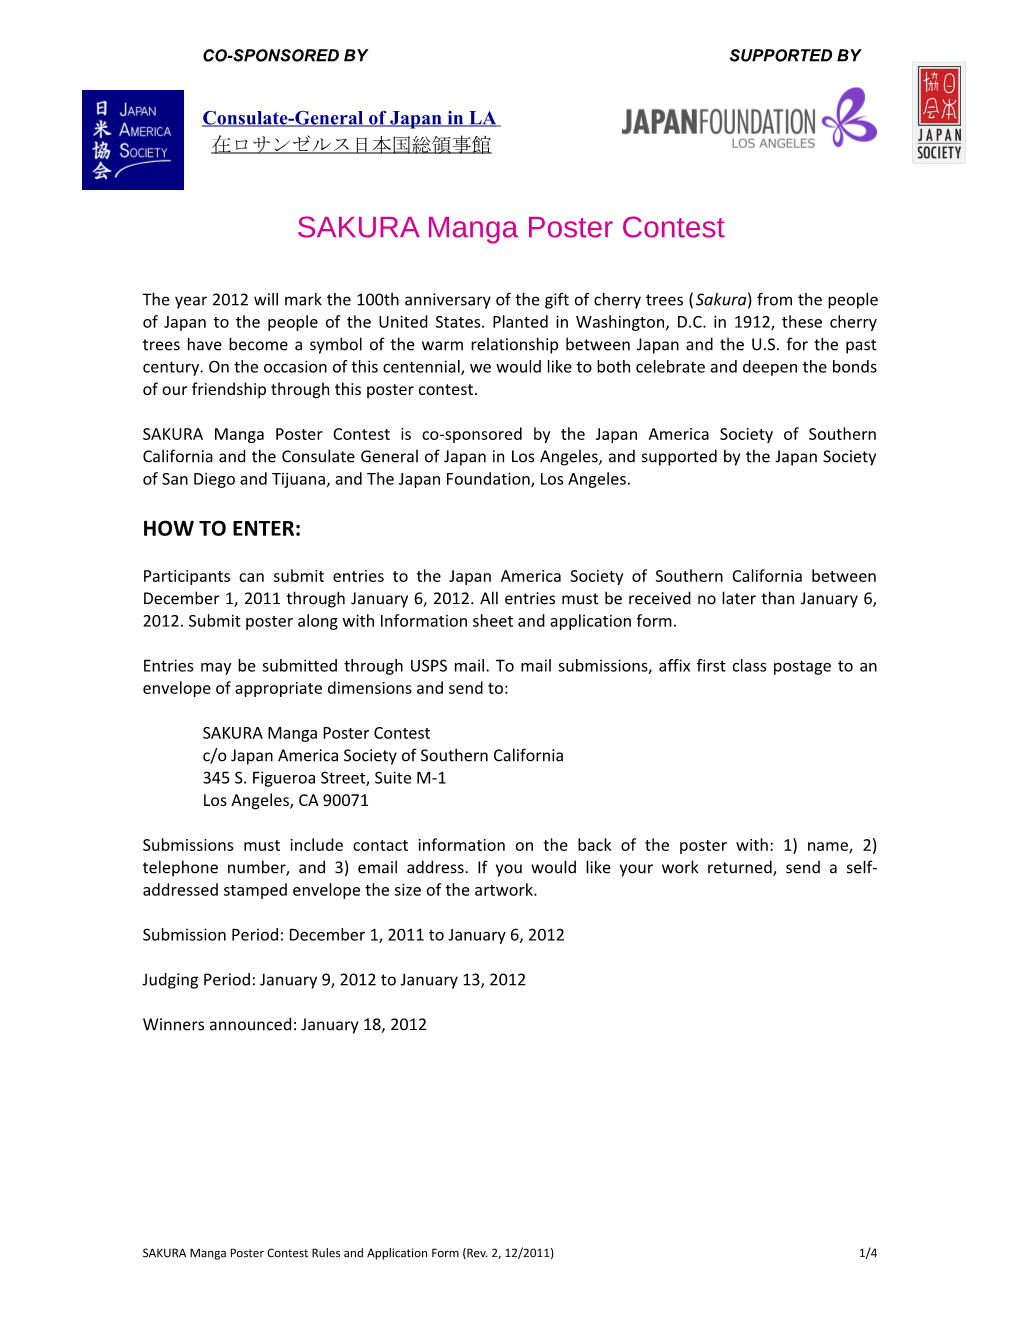 SAKURA Manga Poster Contest